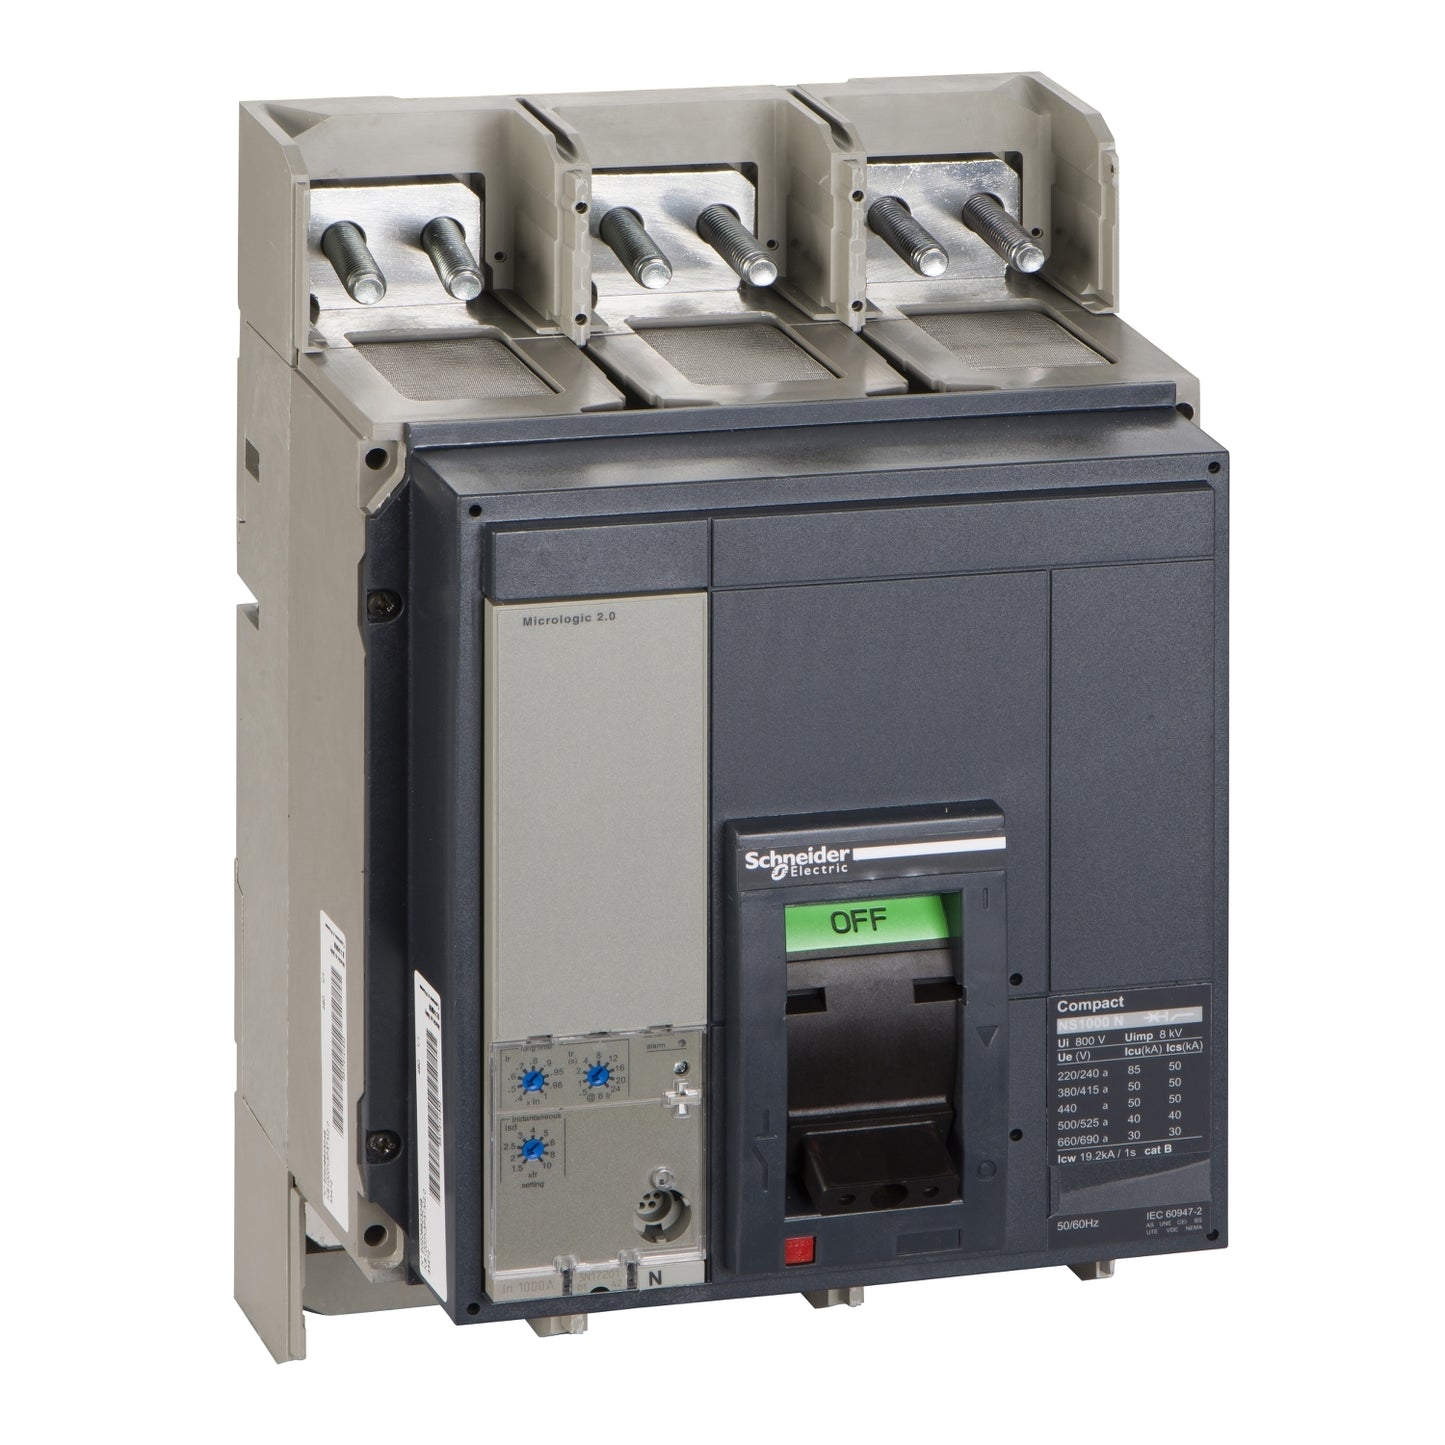 Compact NS - NS1000N - Micrologic 2.0 - 1000A - 50kA 380/415VAC (IEC60947-2) - 33472 - SCHNEIDER